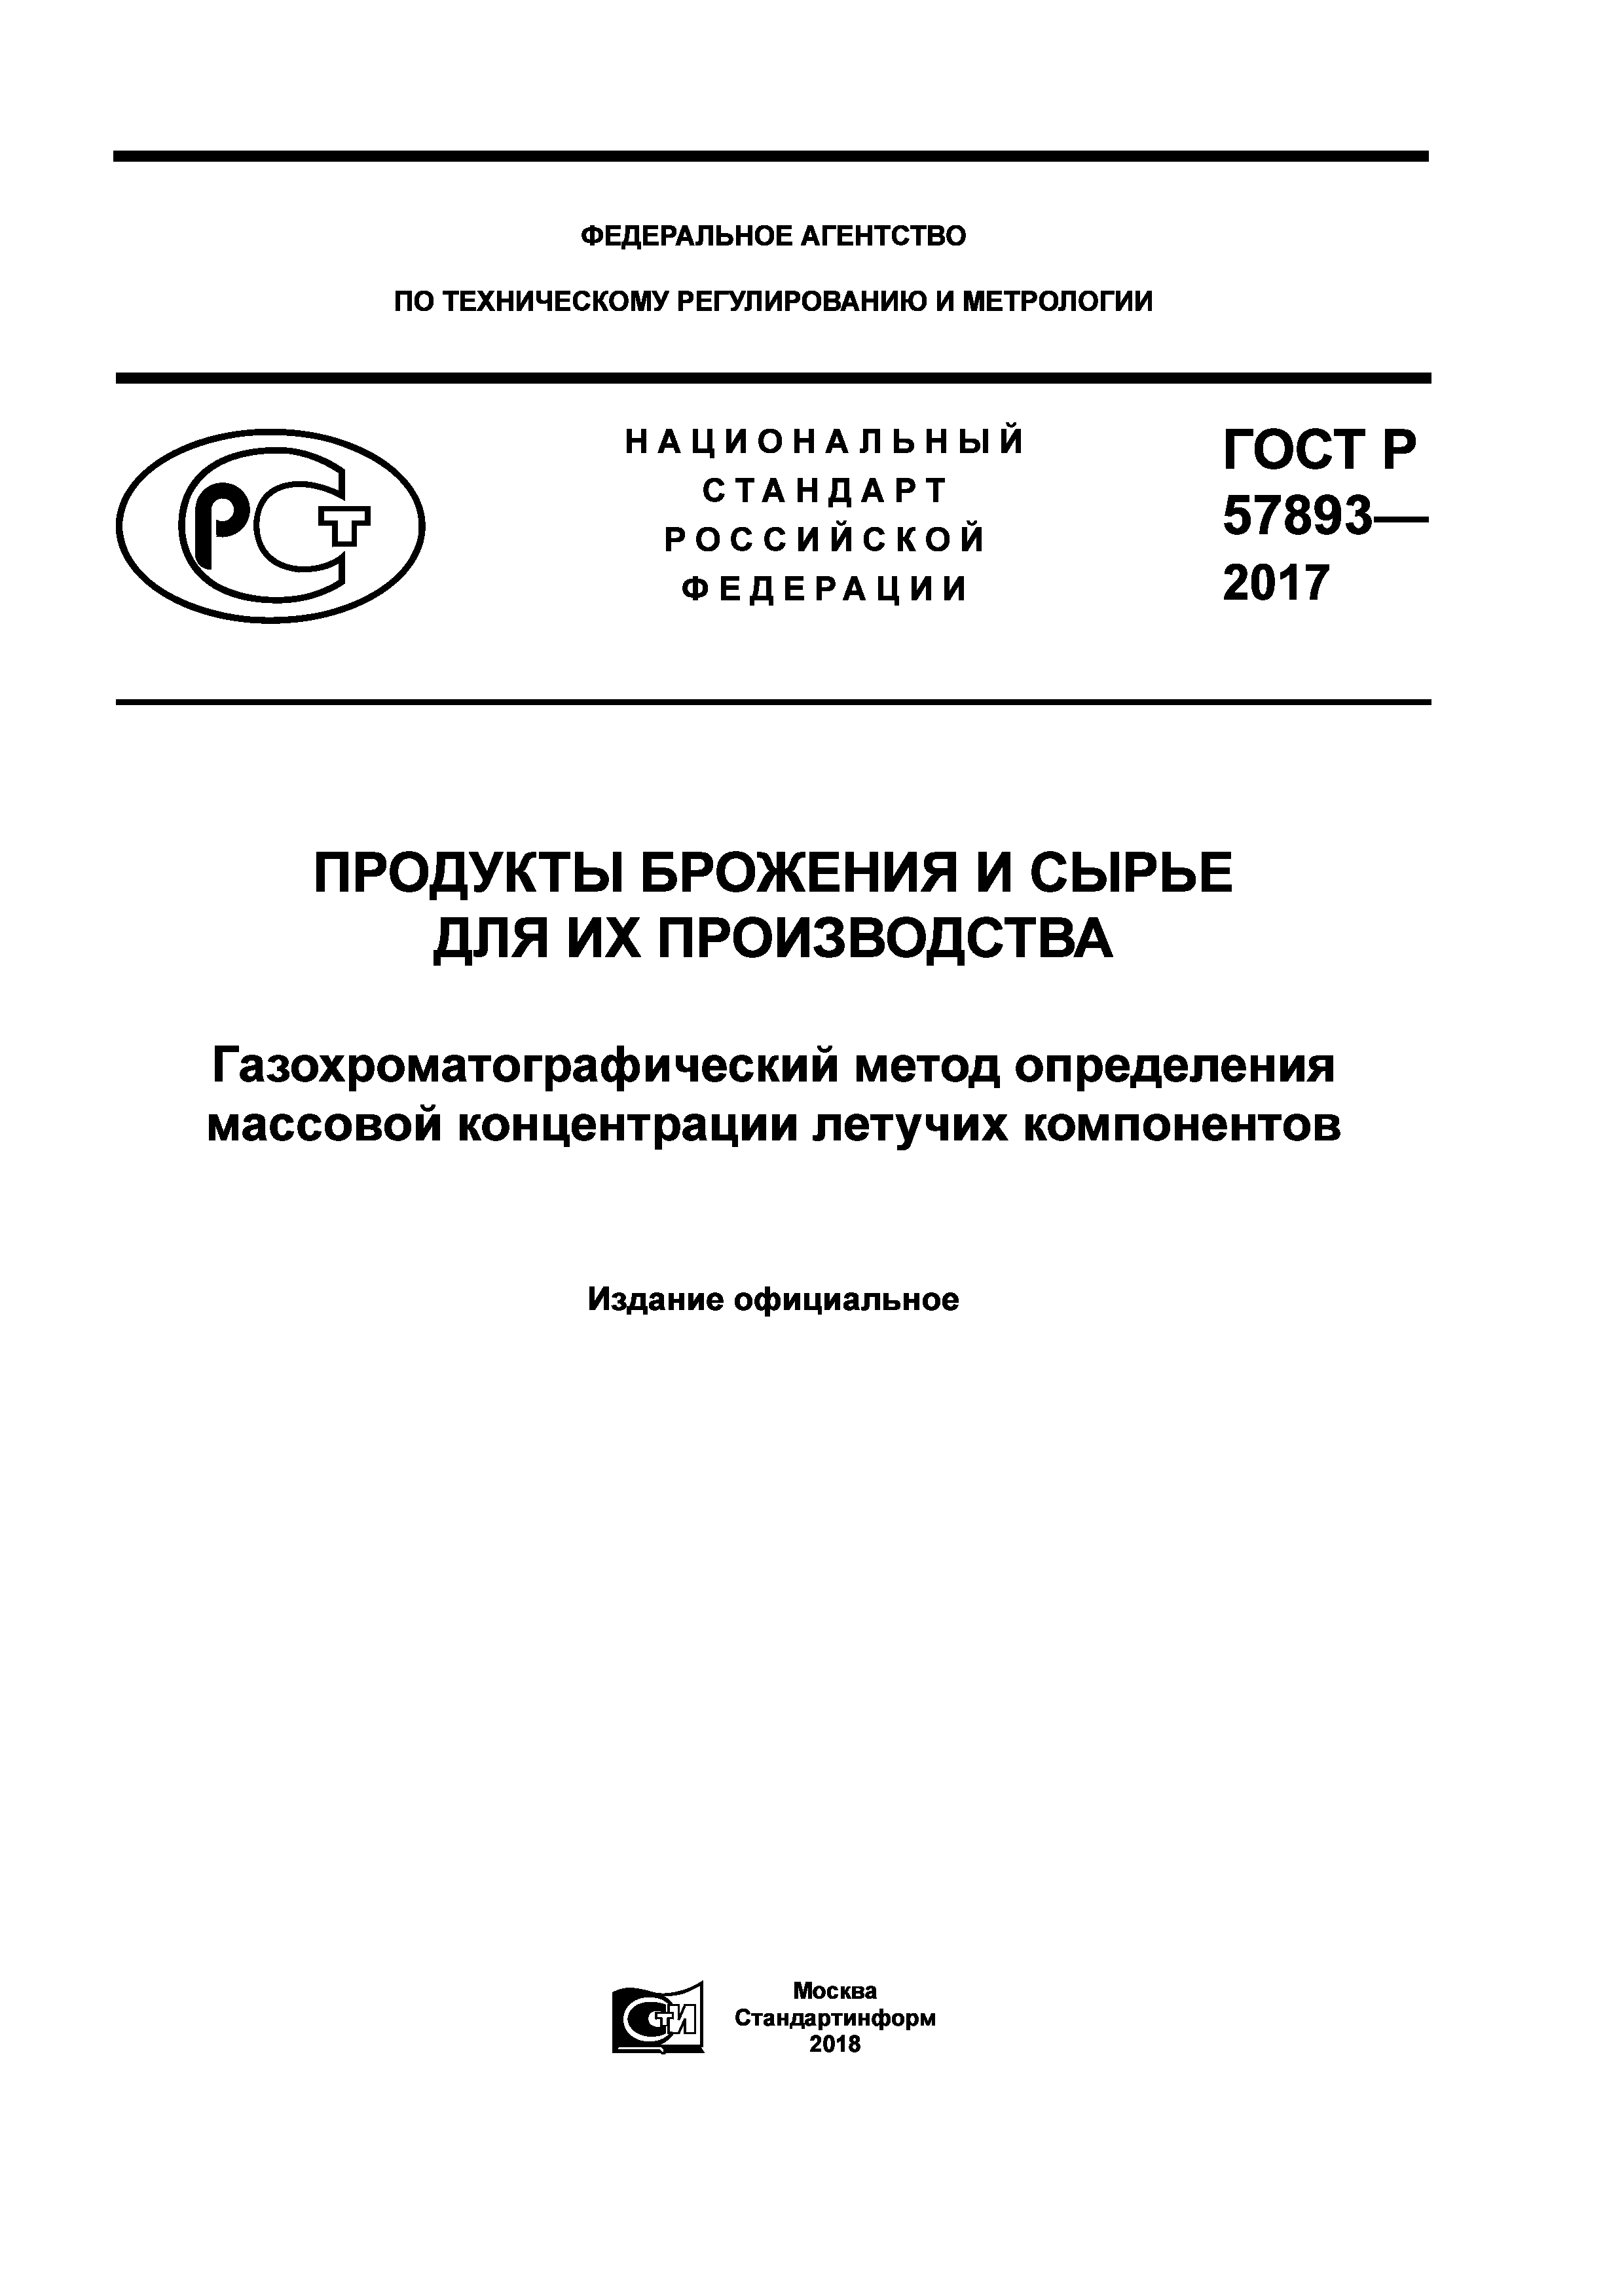 ГОСТ Р 57893-2017